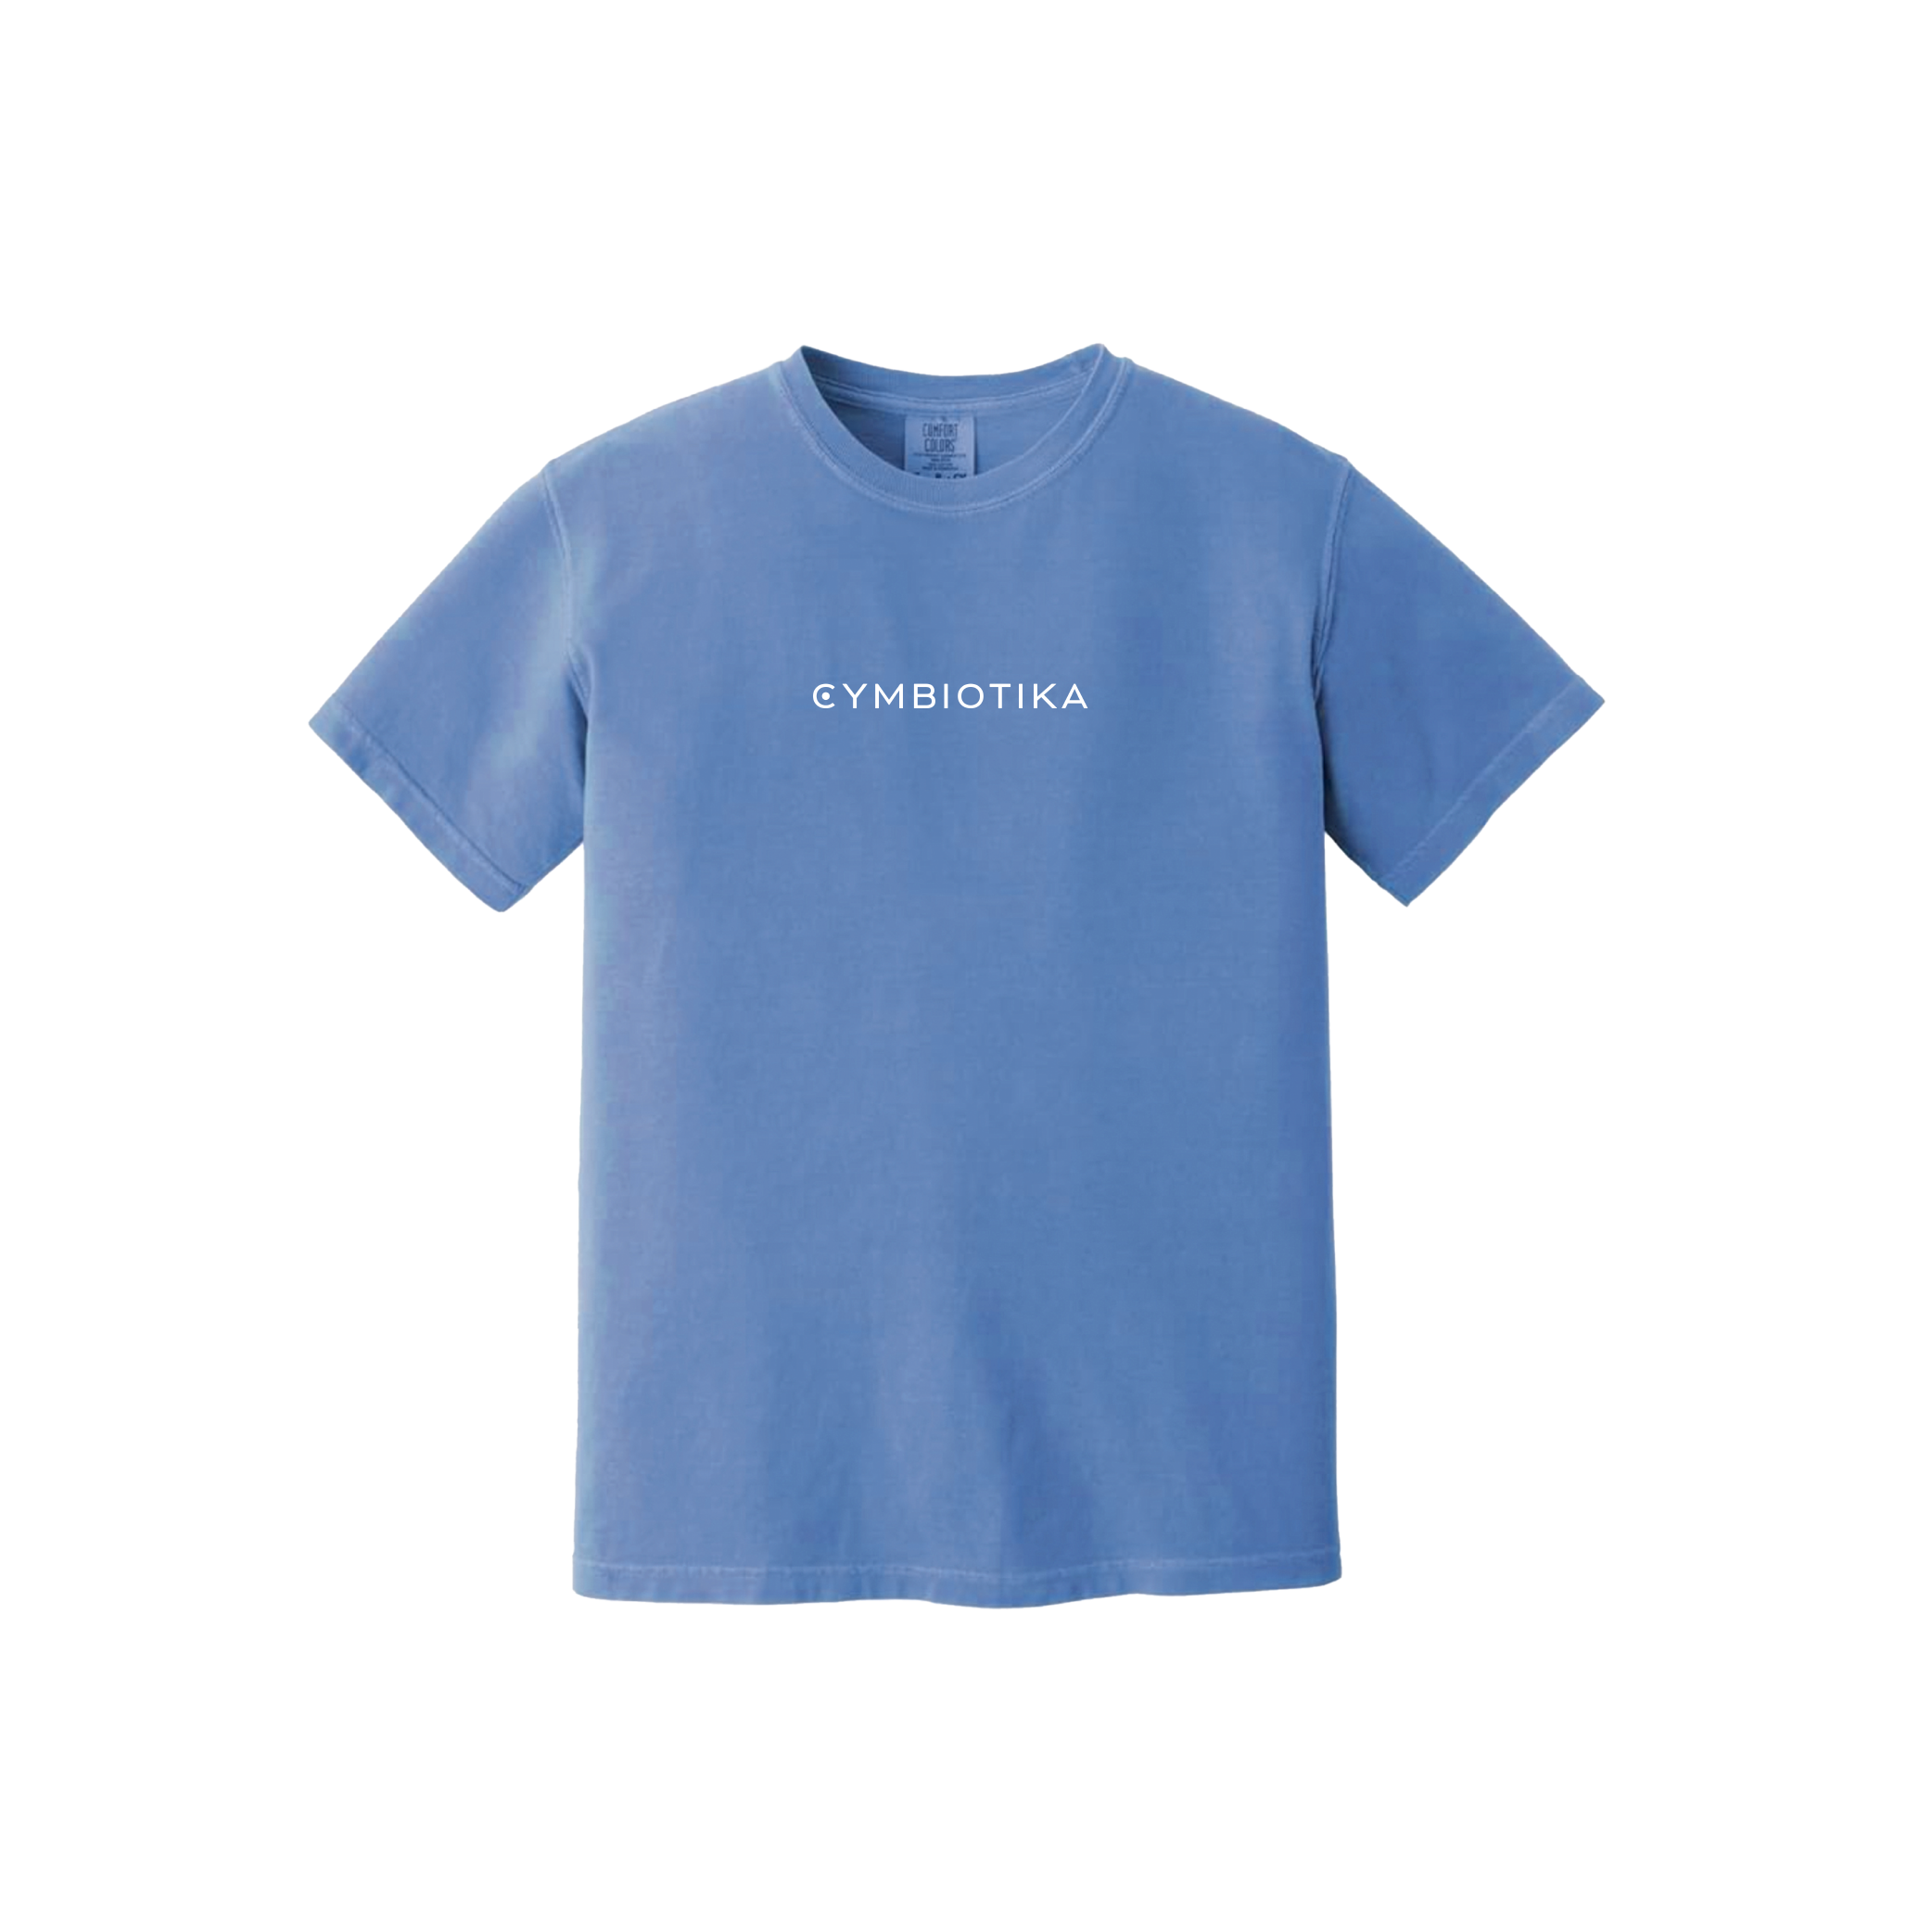 Cymbiotika x San Diego Surfrider Earth Day T-Shirt